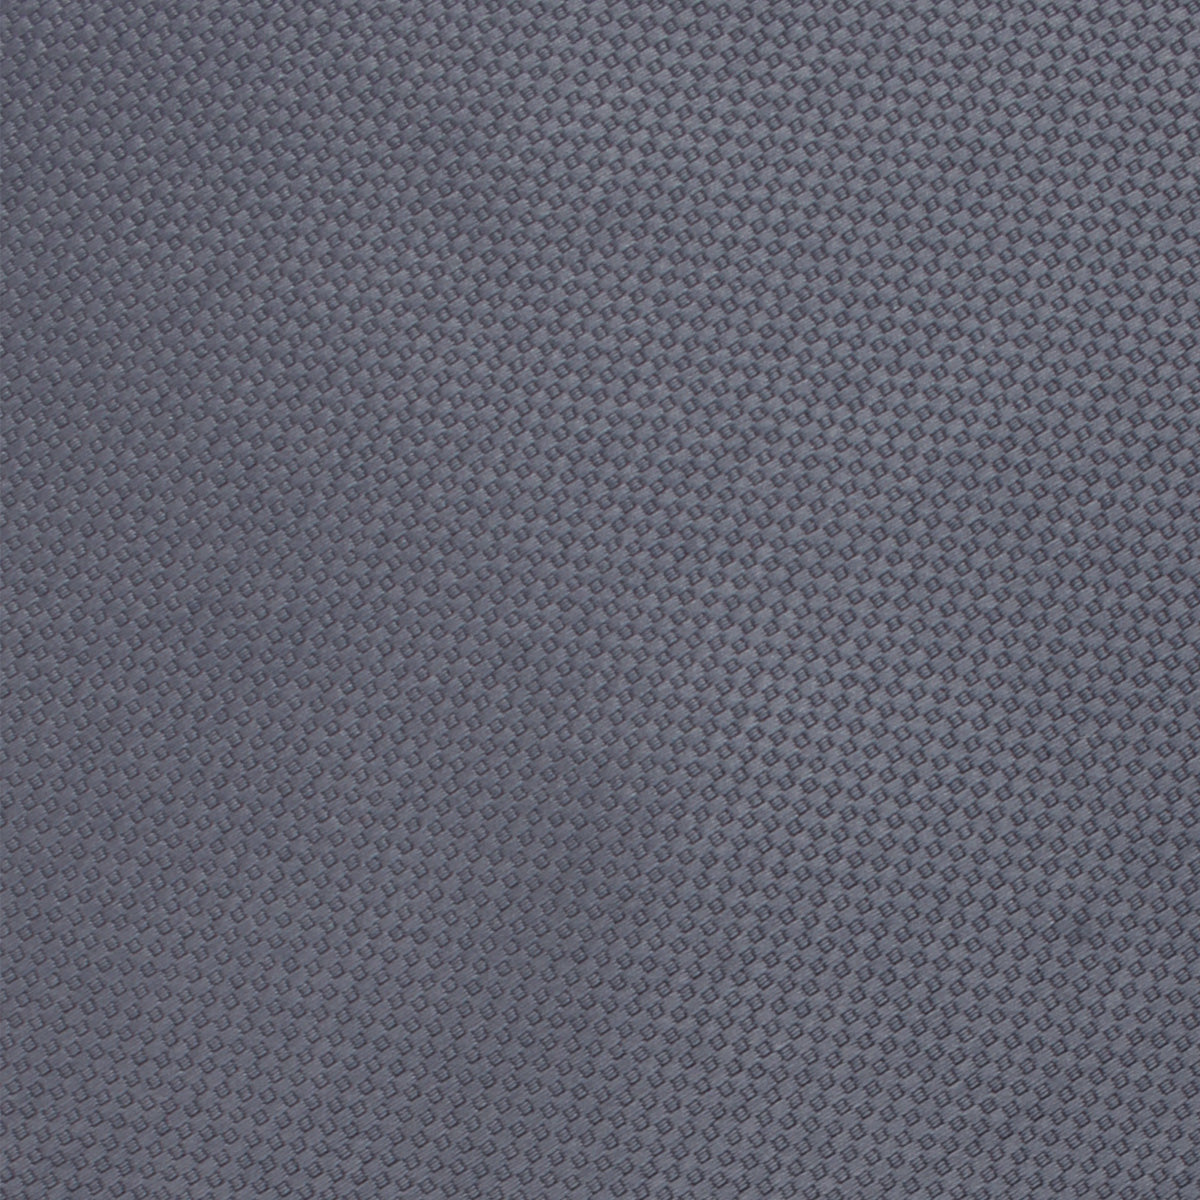 Slate Grey Charcoal Basket Weave Self Bow Tie Fabric